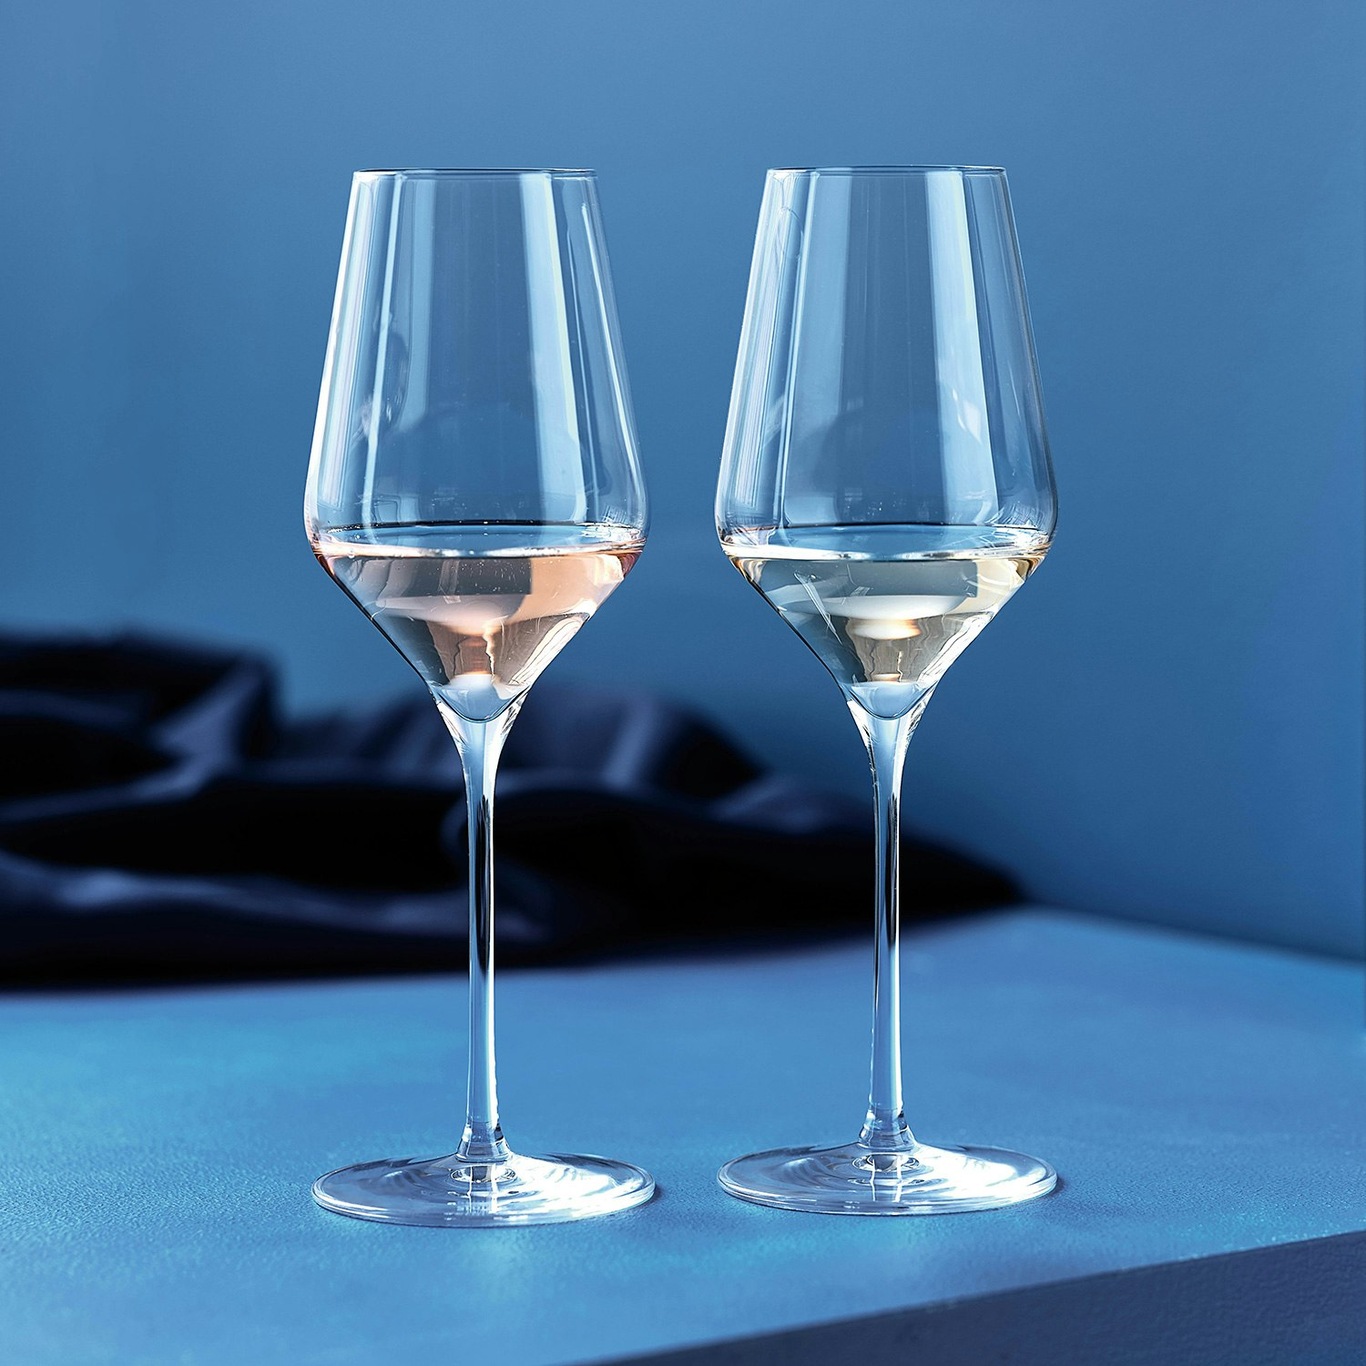 https://royaldesign.com/image/2/aida-connoisseur-extravagant-white-wine-glass-645-cl-4-pack-1?w=800&quality=80